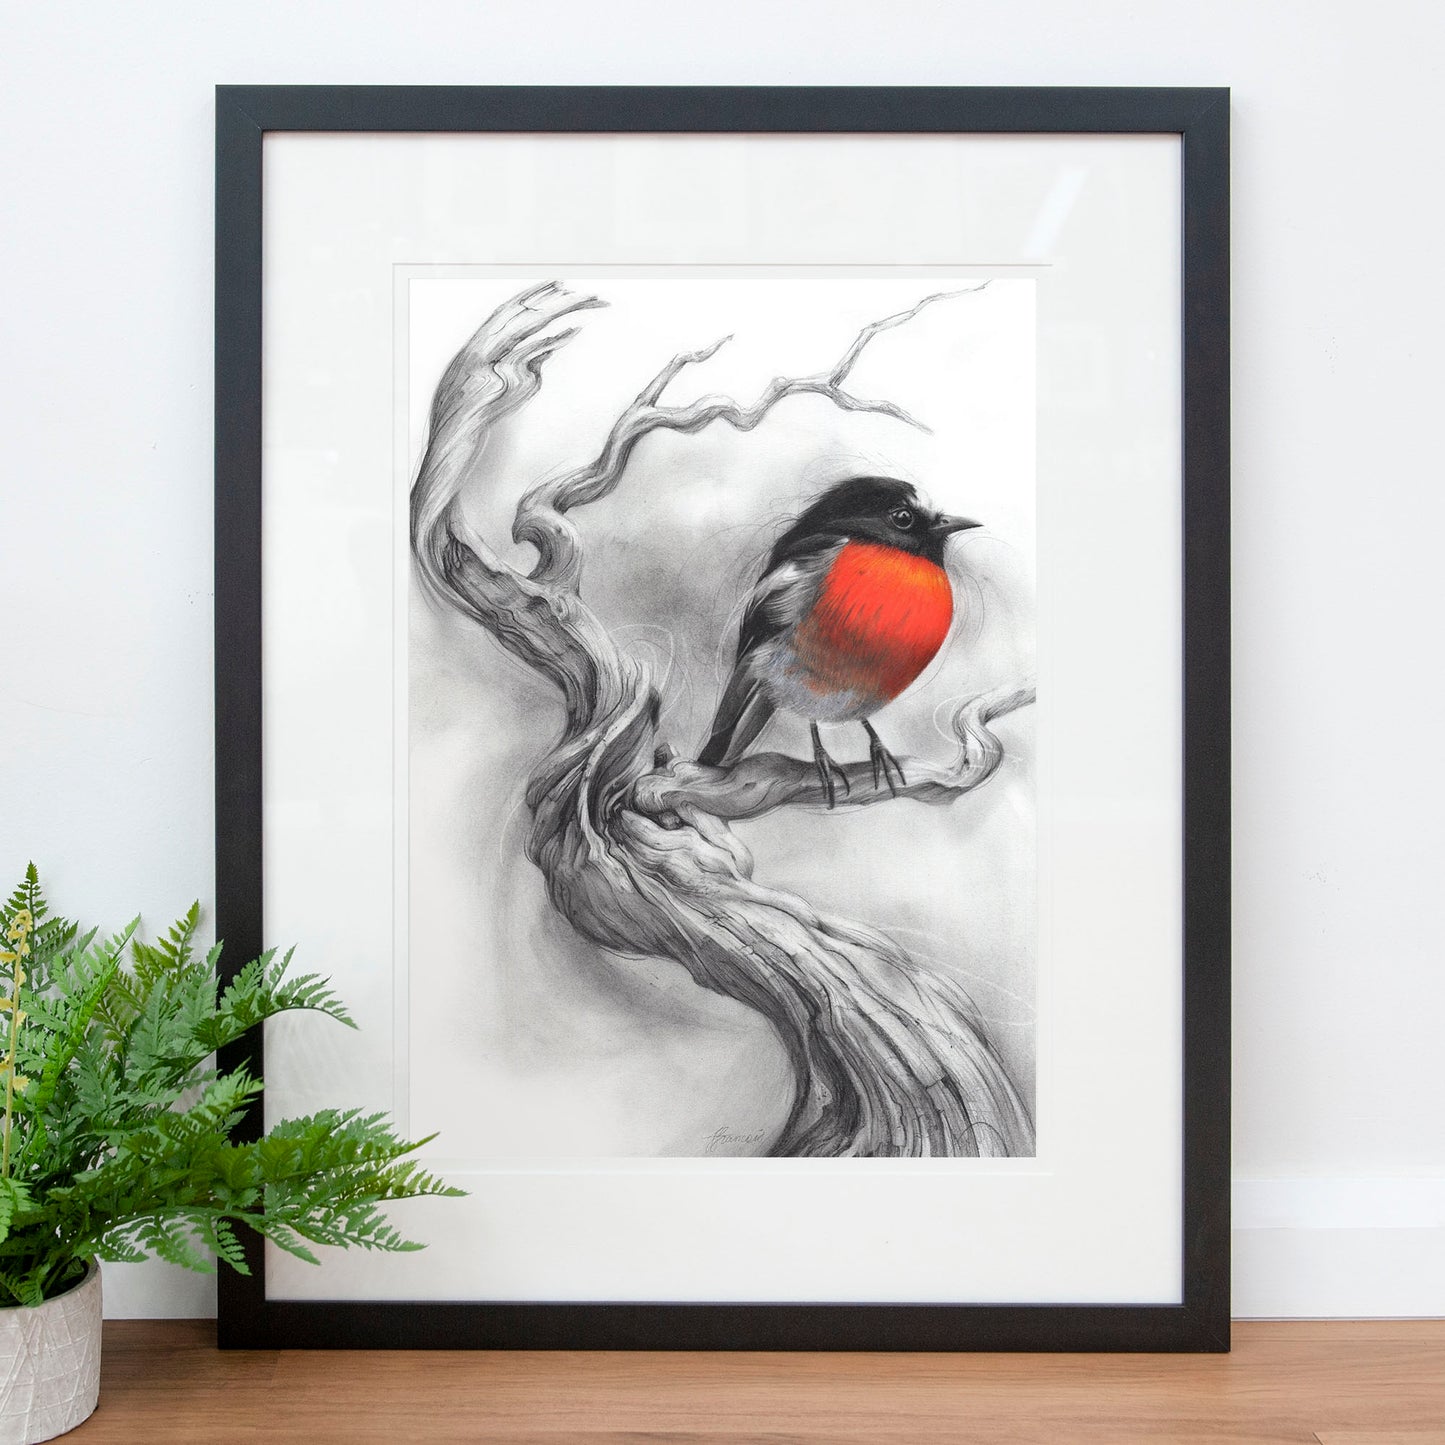 'Scarlet Robin' art print